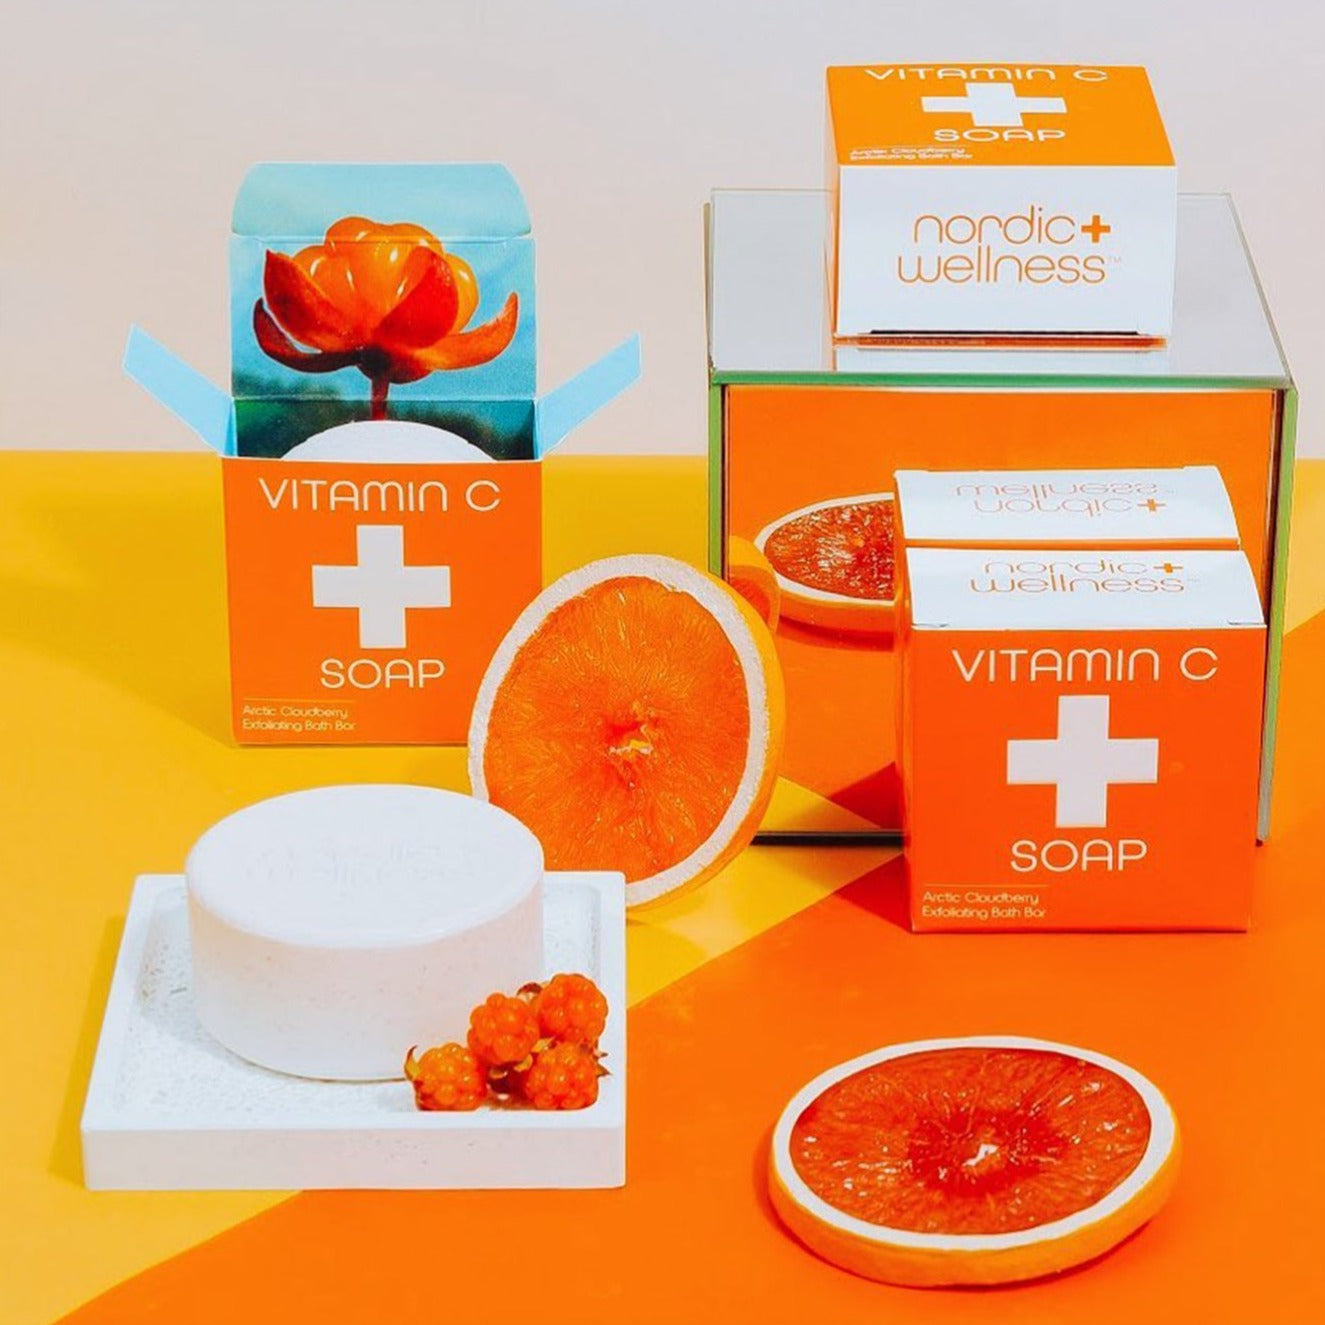 Kalastyle Nordic + Wellness Vitamin C Soap